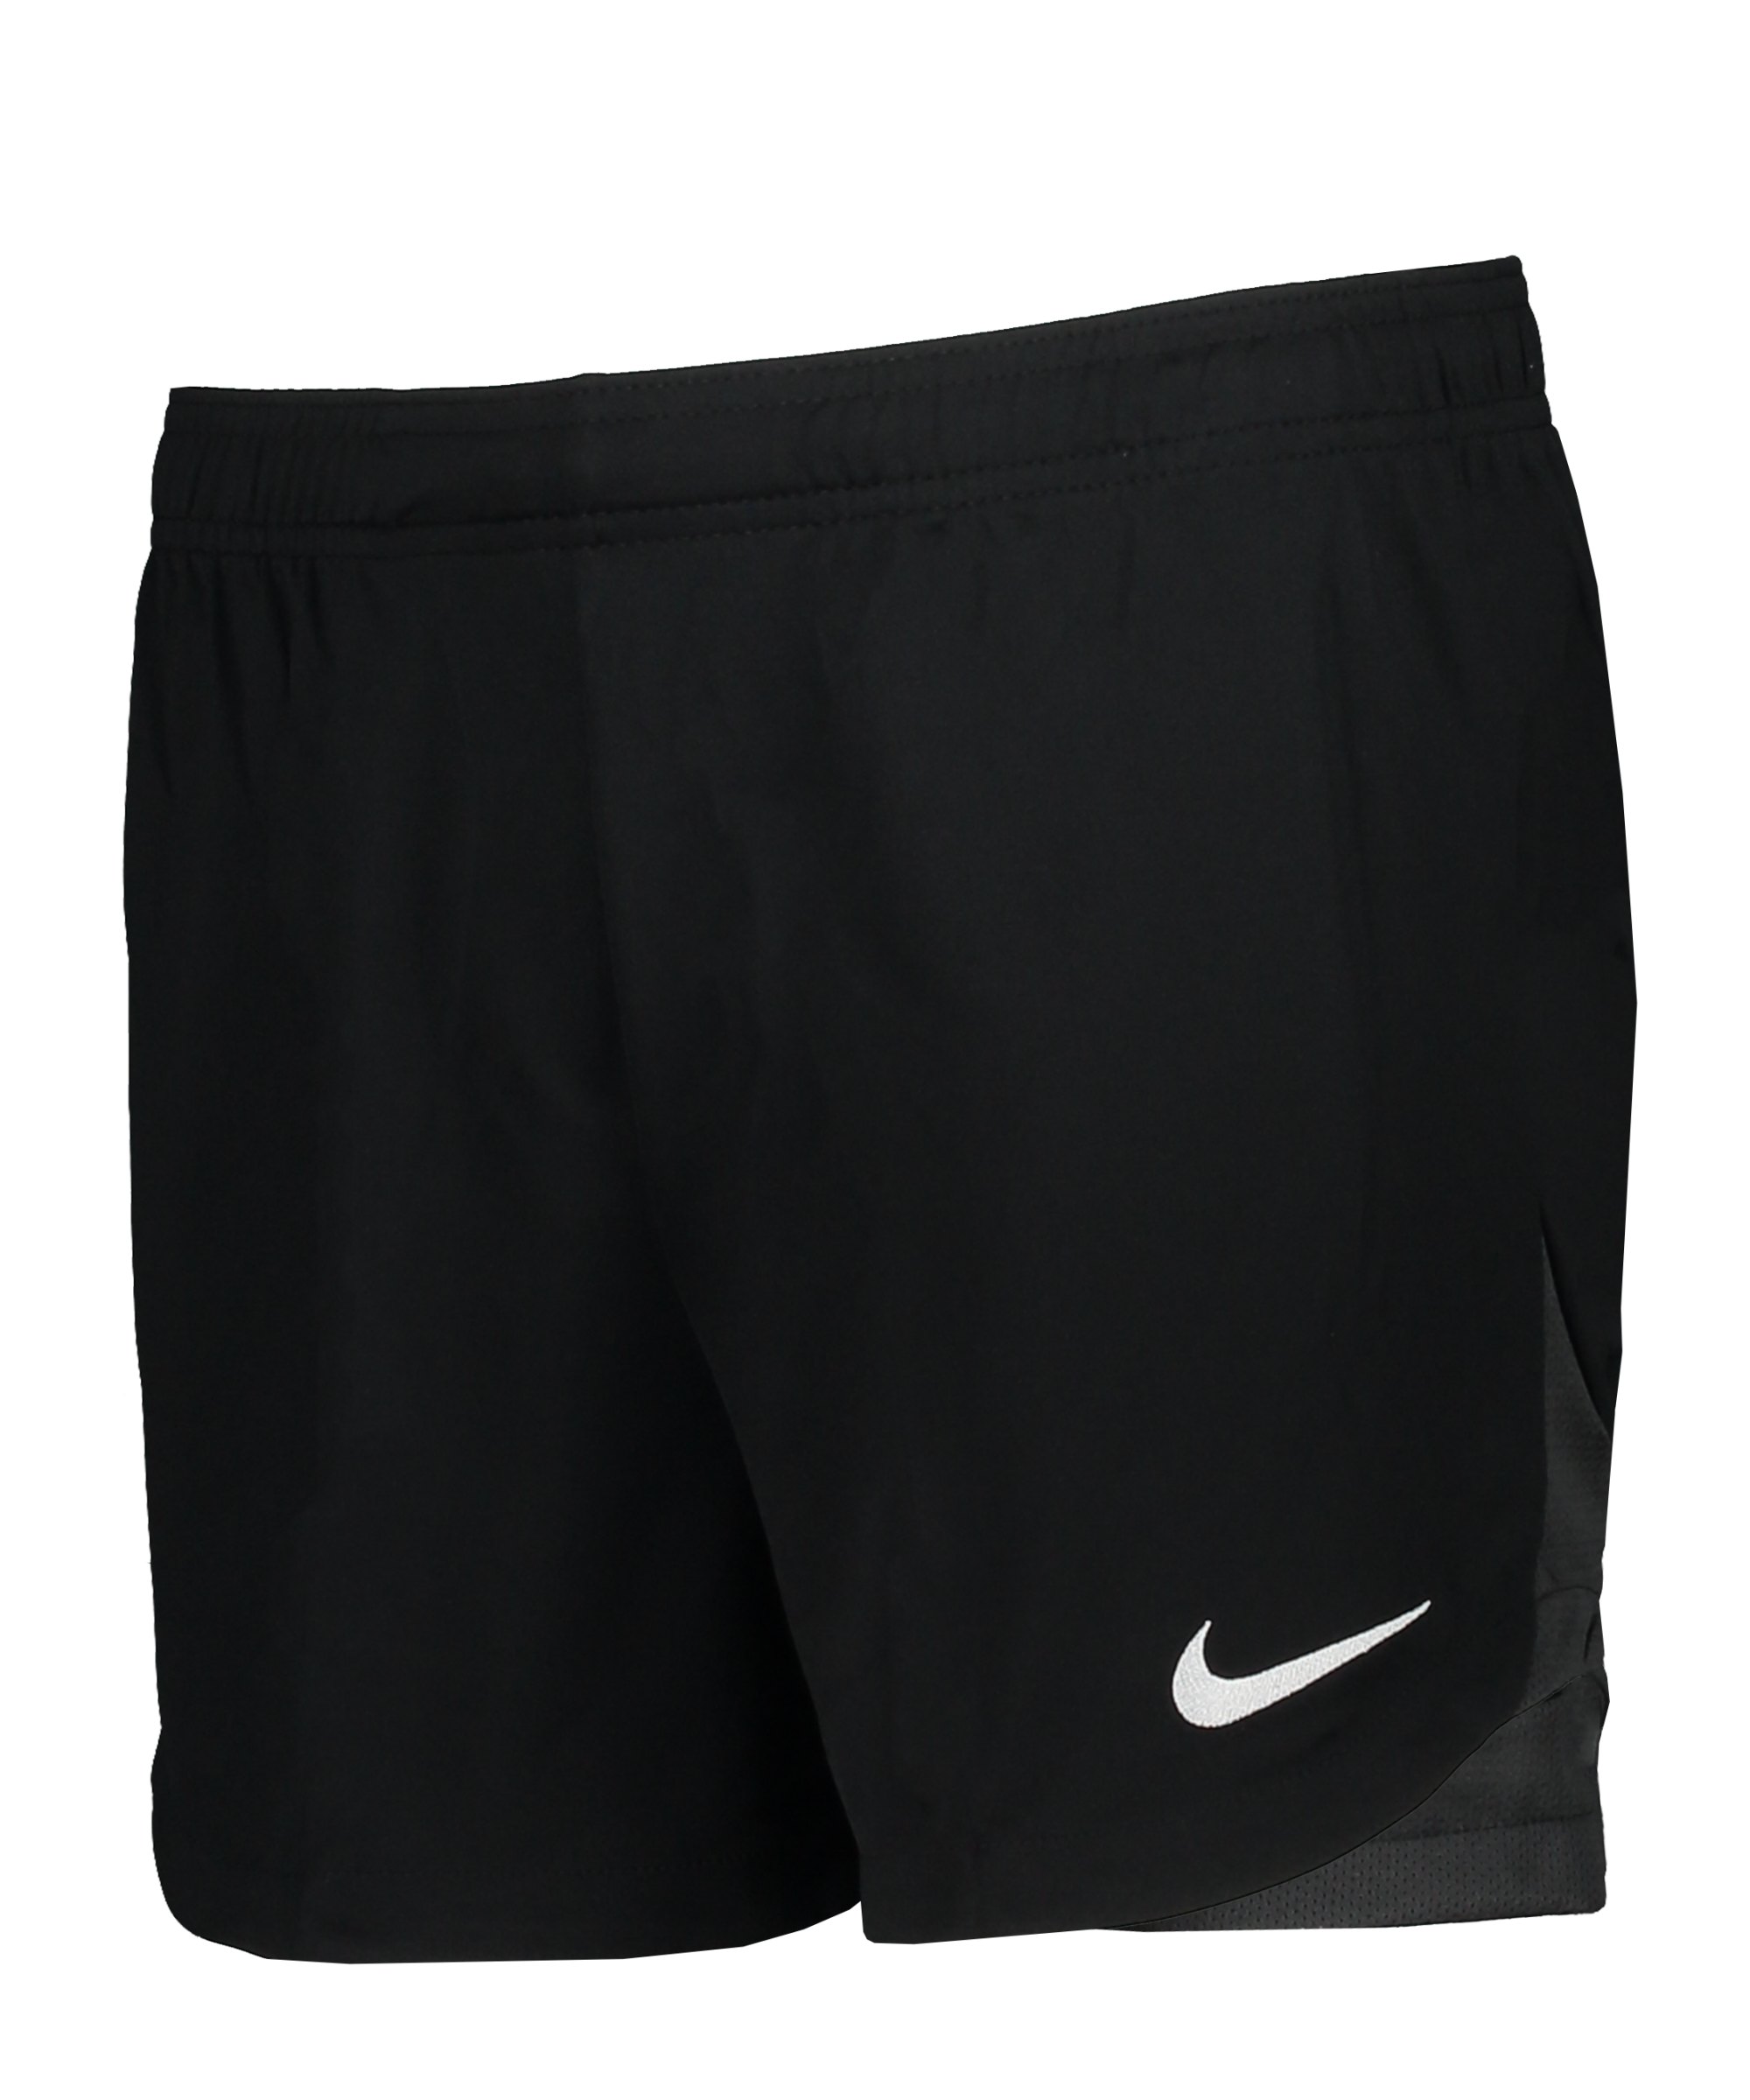 Nike Academy Pro Short Damen Schwarz Grau F014 - schwarz